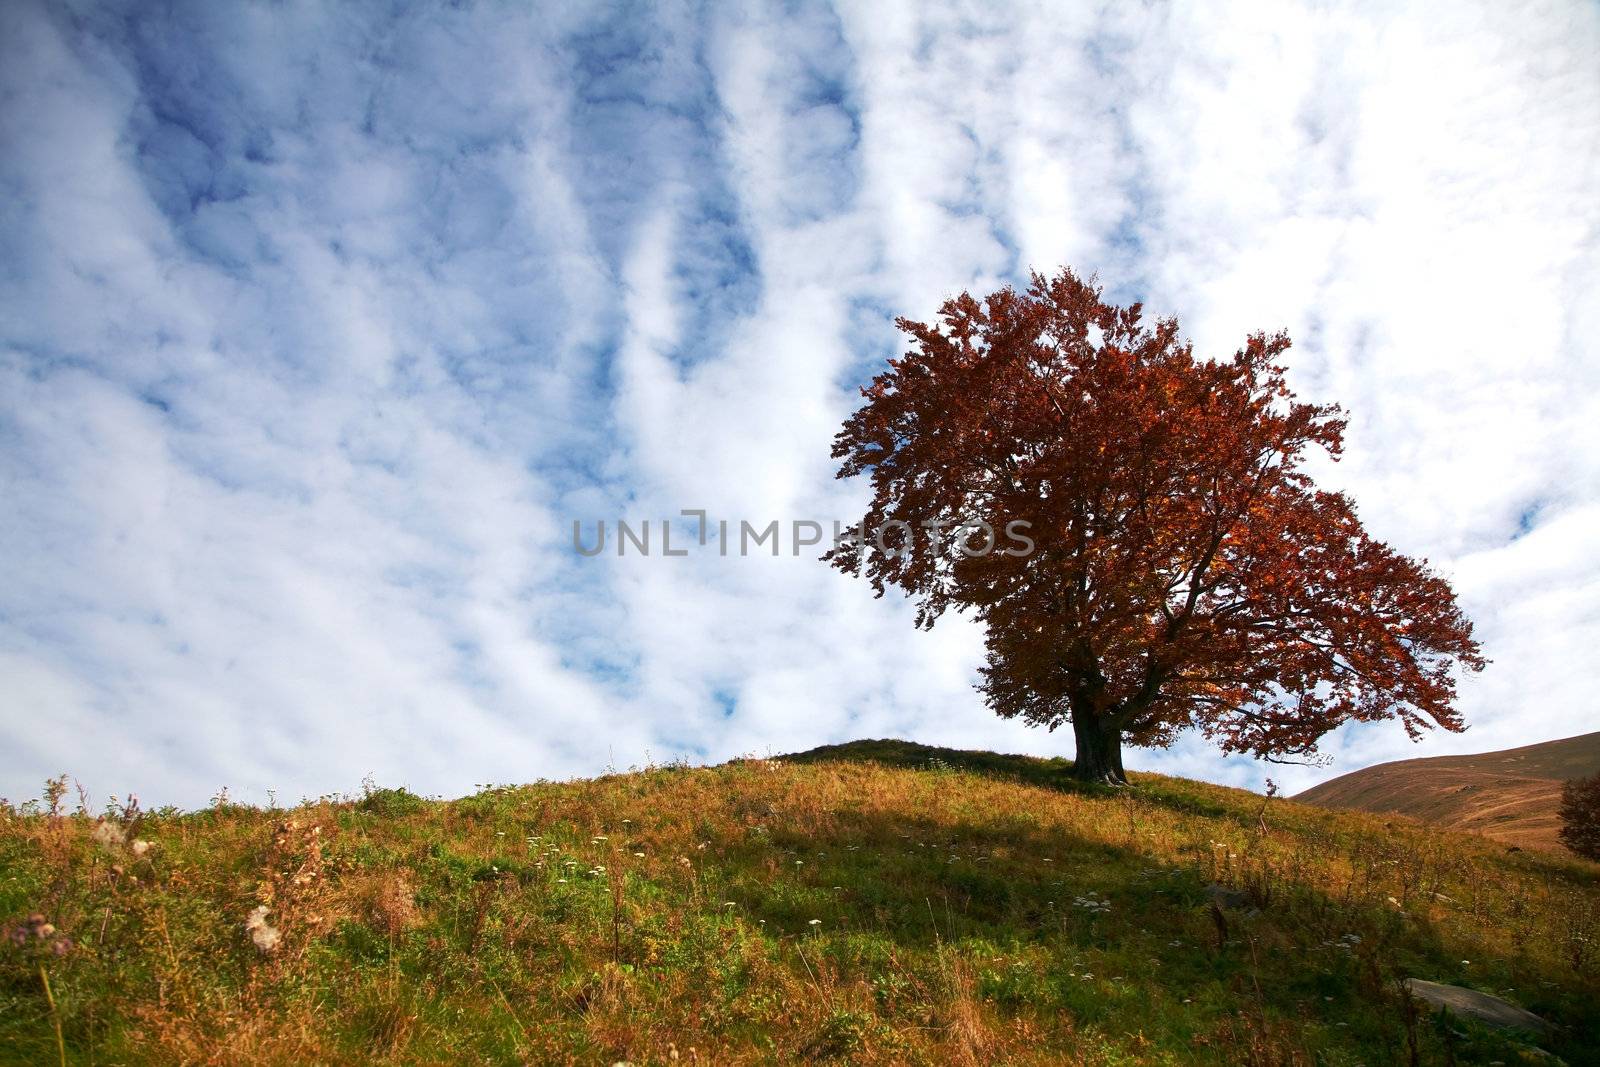 Autumn theme: An image of autumn tree on a hill.